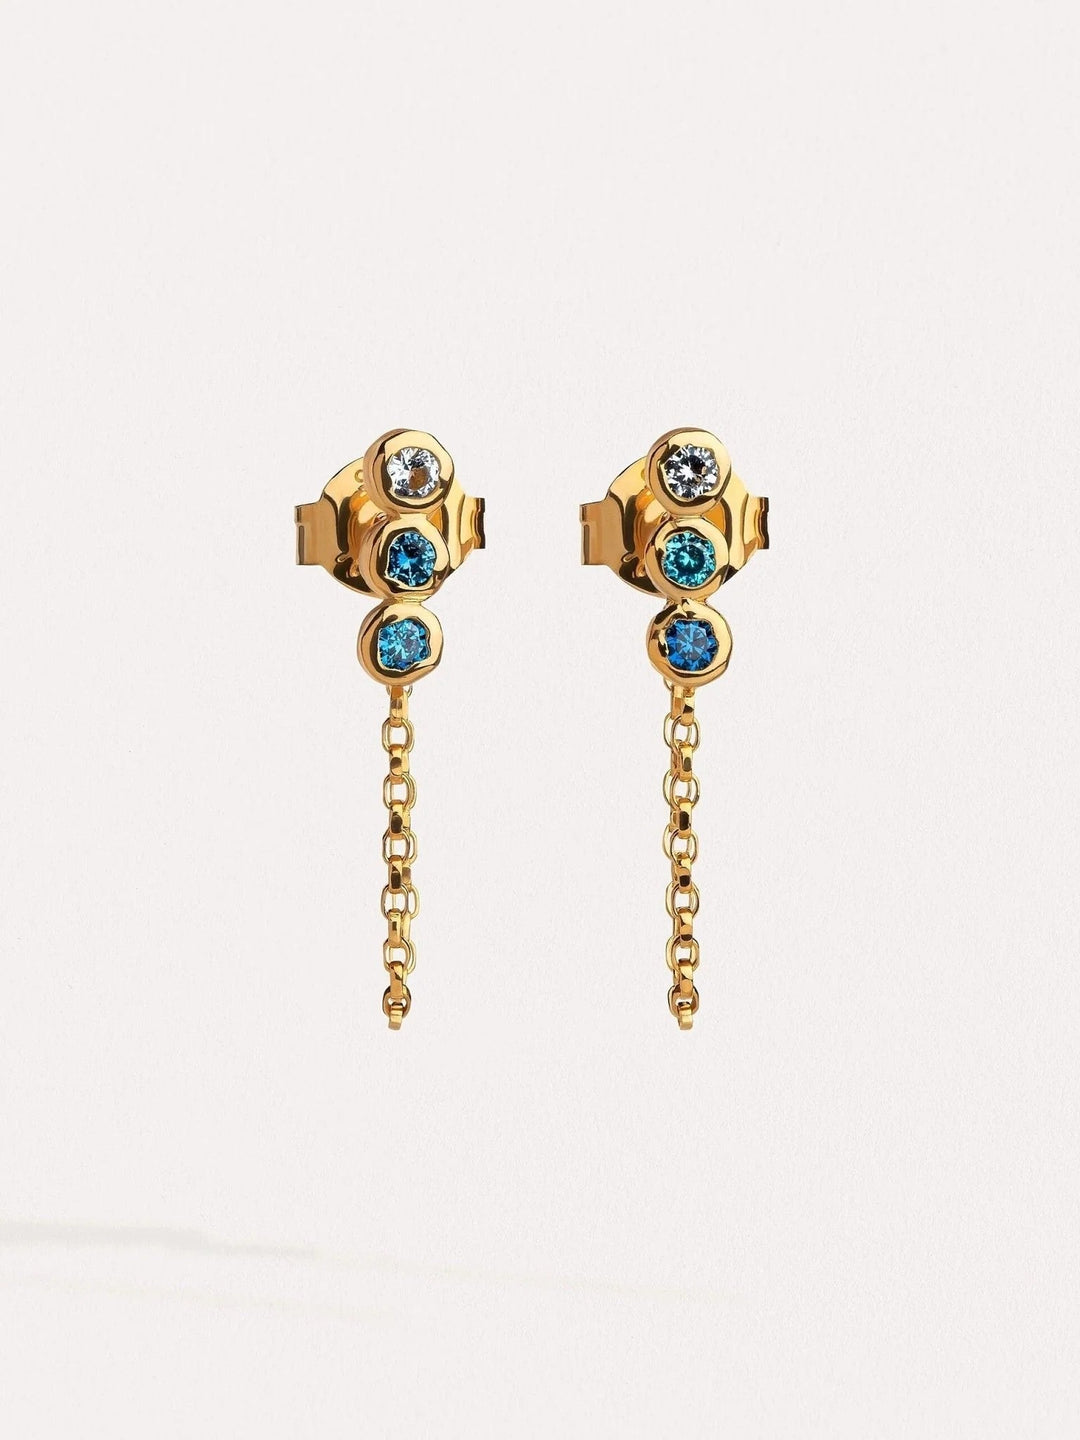 Branca Aquamarine Chain Earrings - BLUESAnniversary Giftaquamarine earringsLunai Jewelry